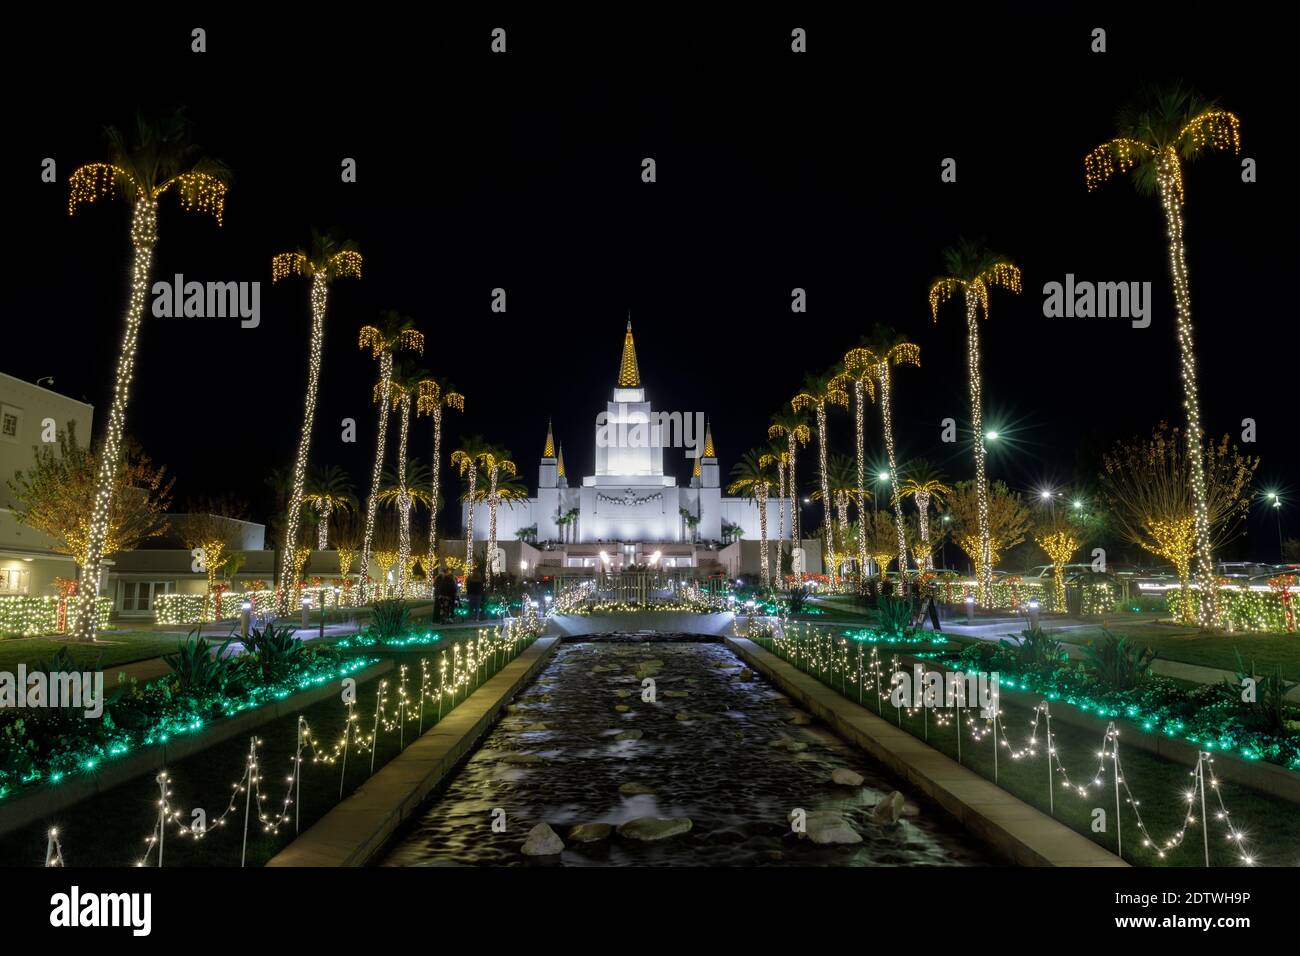 Oakland California Tempel mit Weihnachtsbeleuchtung Stockfoto